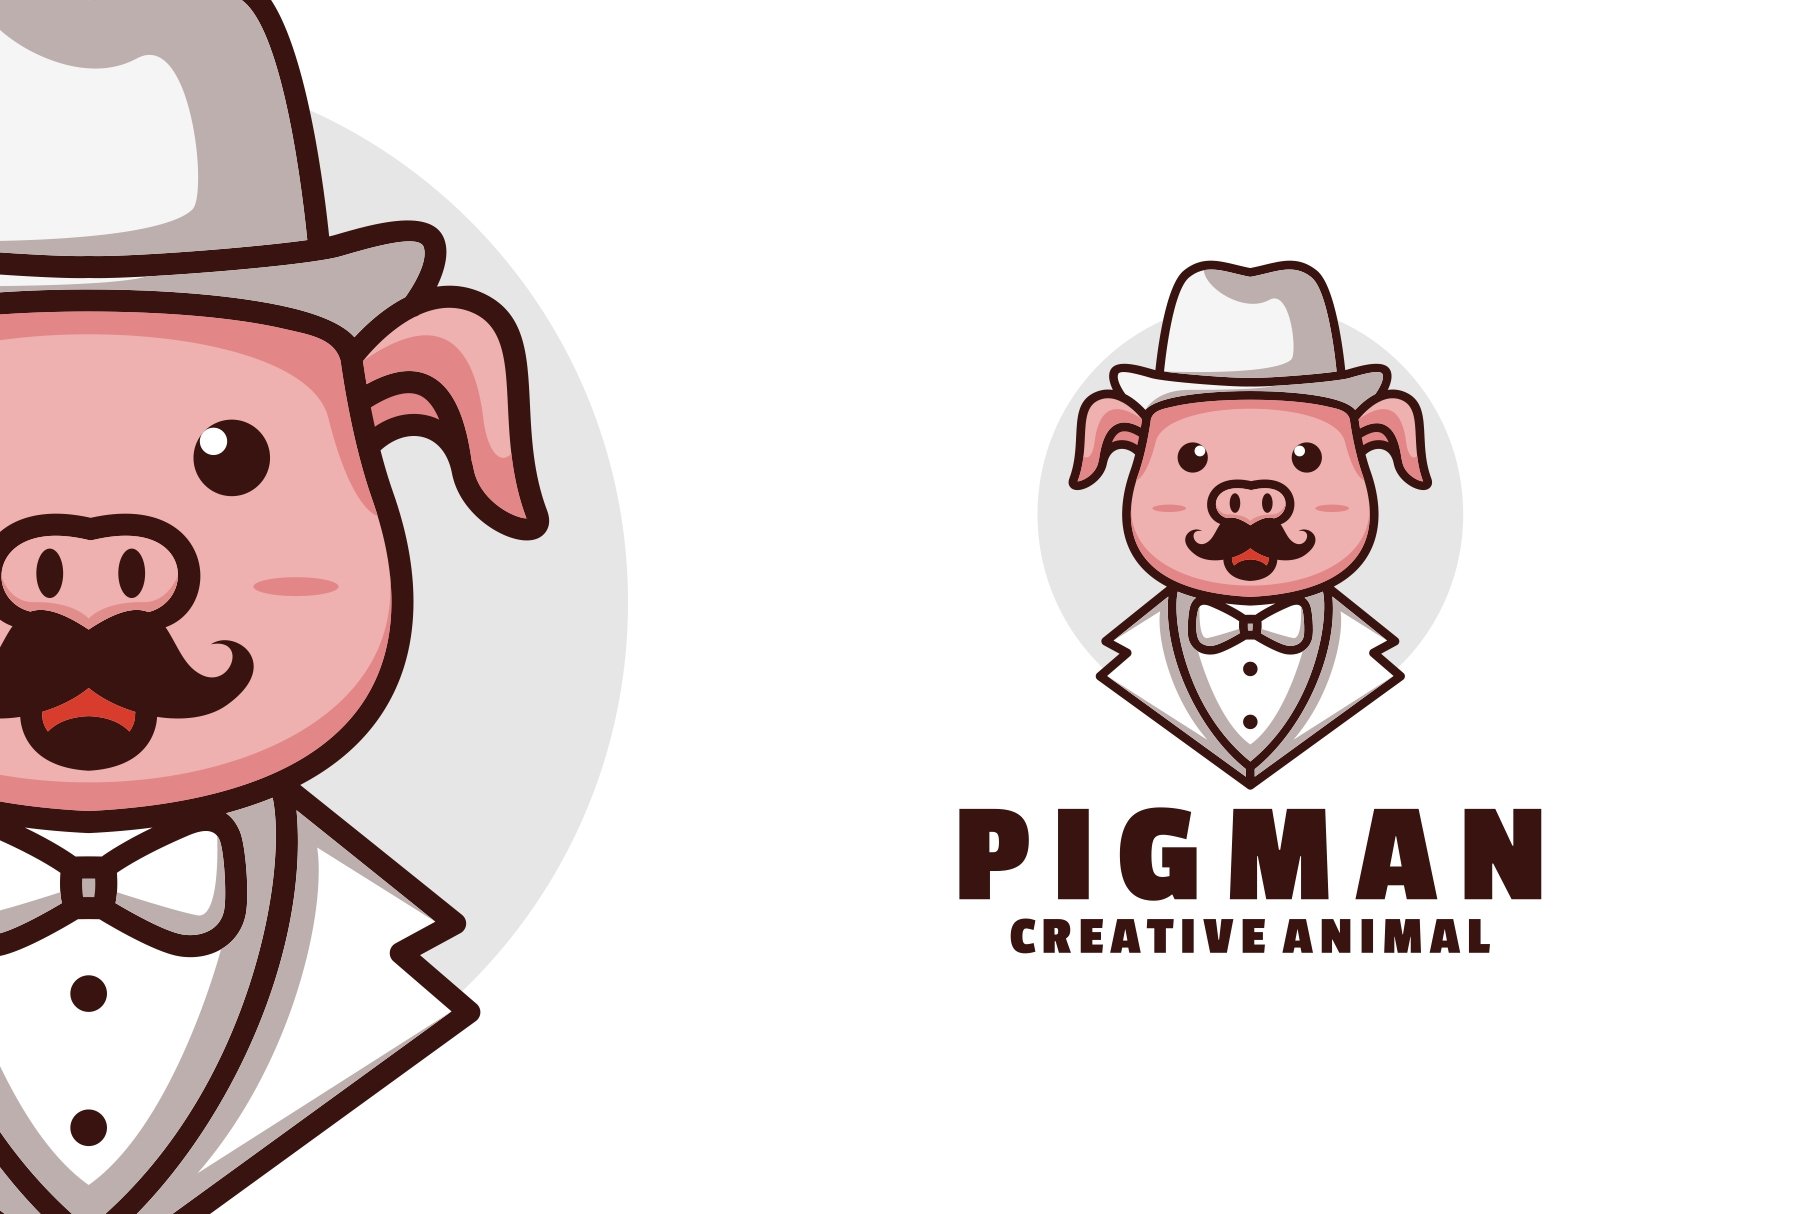 Pig Cartoon Character Logo cover image.